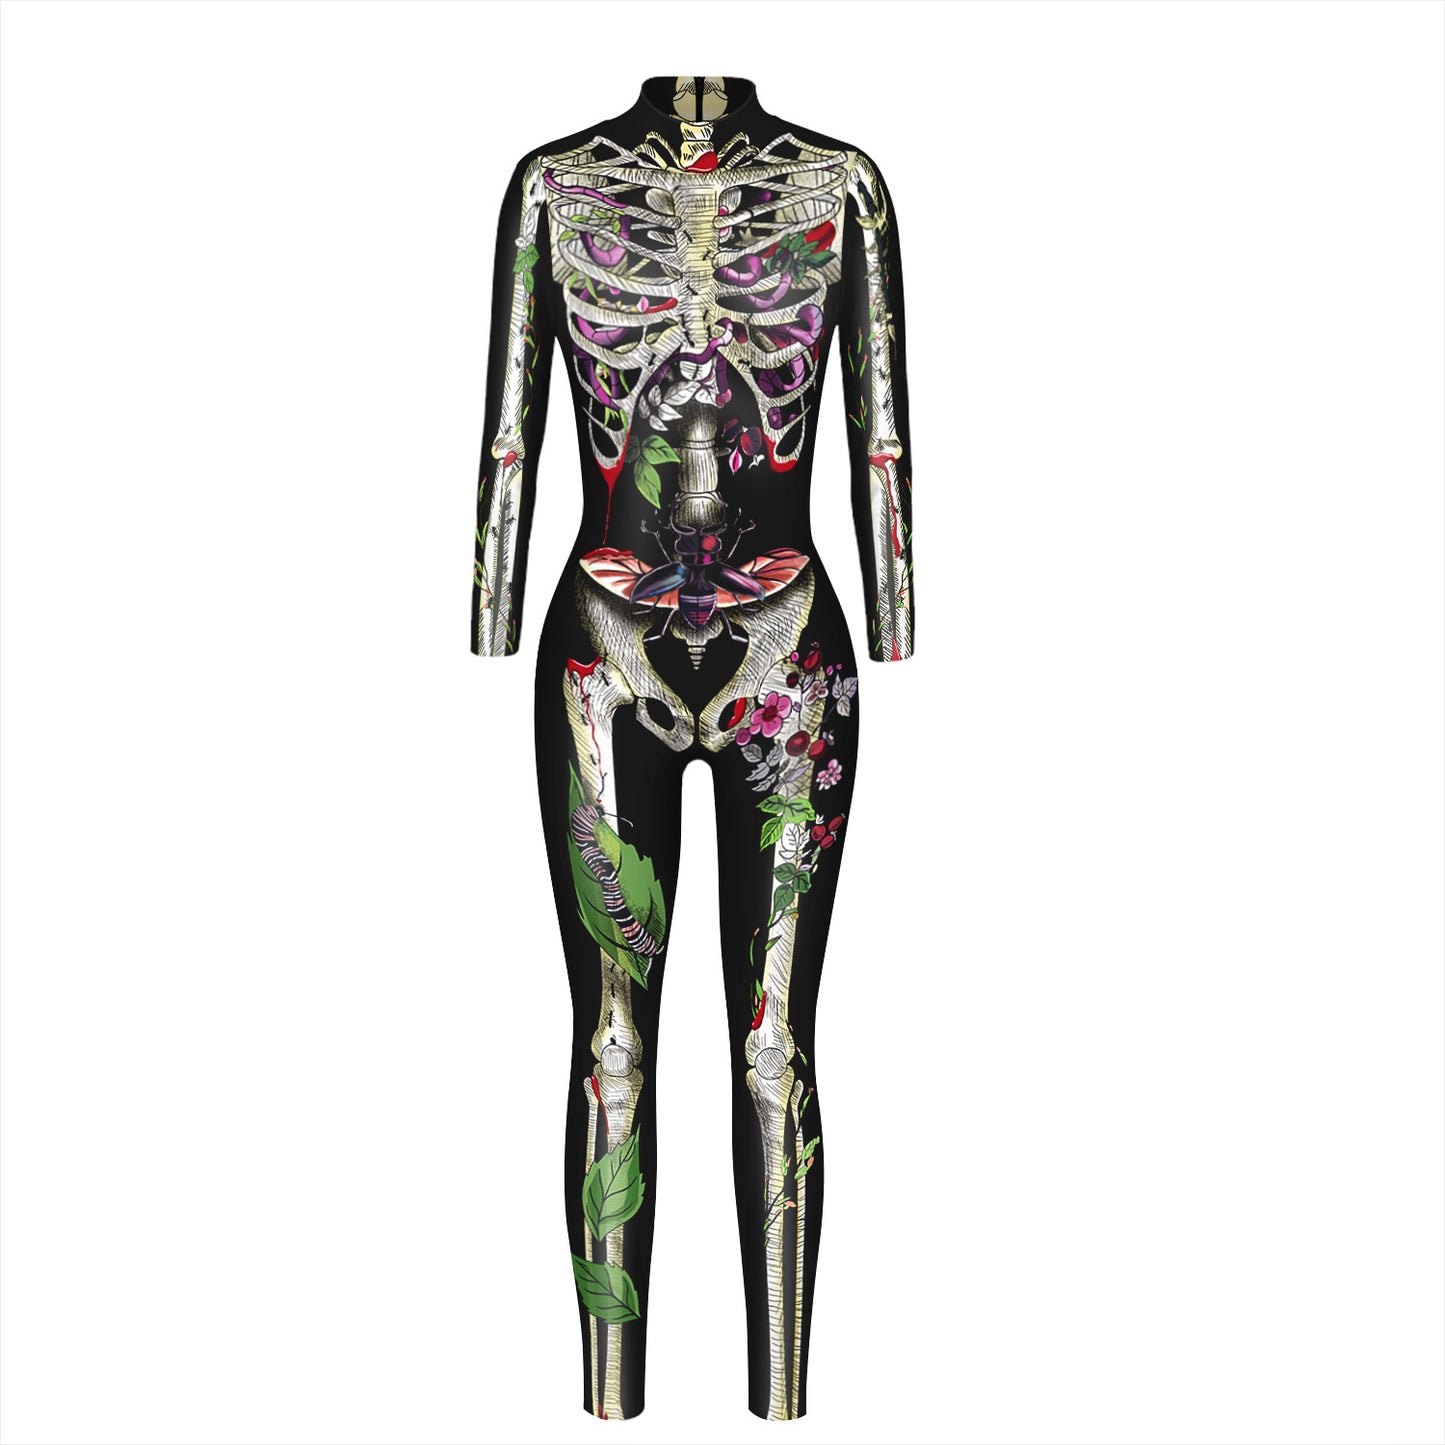 Skeleton 3D digital printing women's cos costume tight-fitting long-sleeved cosplay costume Halloween jumpsuit